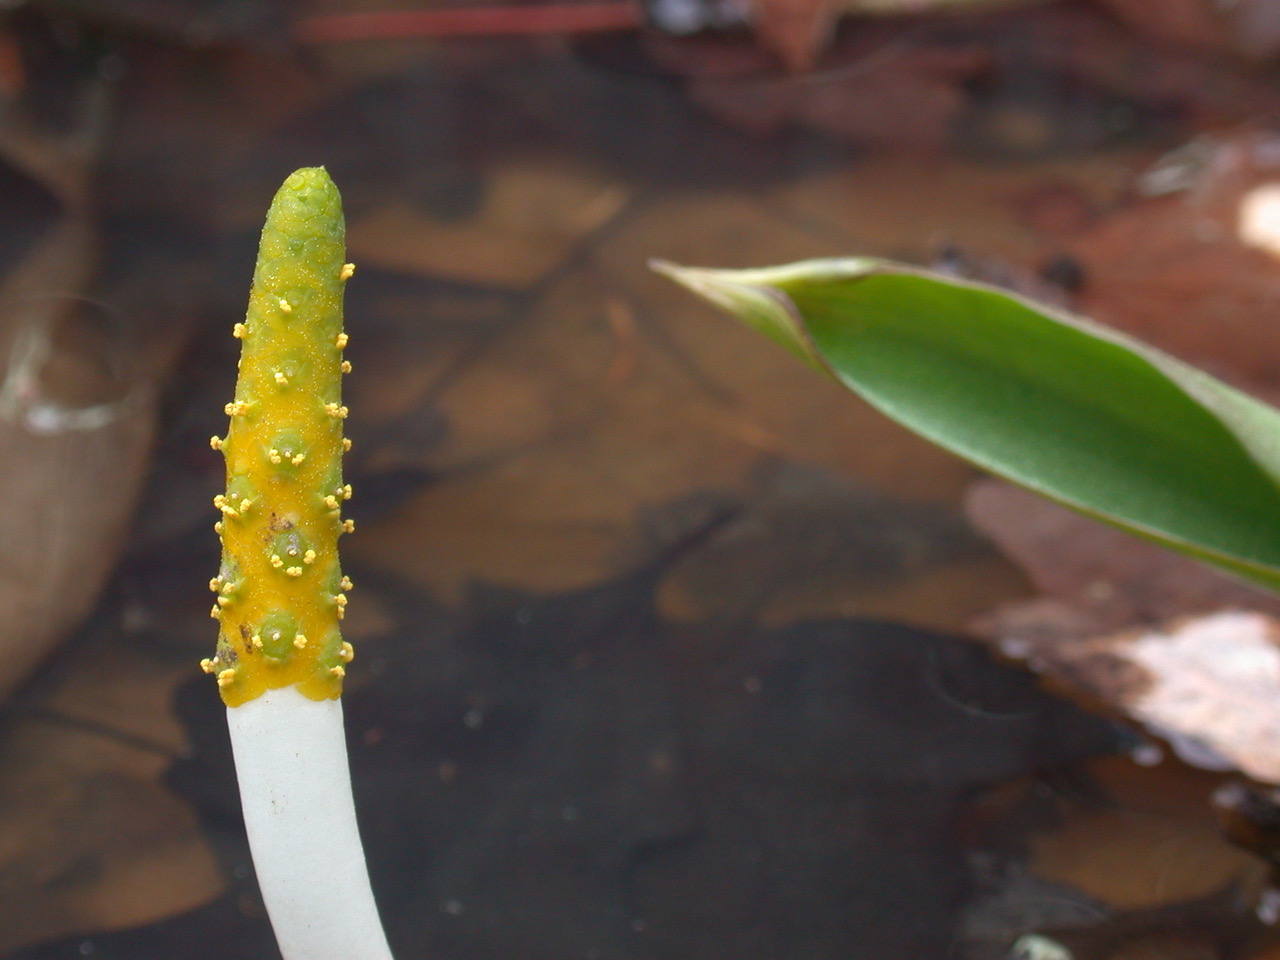 The Scientific Name is Orontium aquaticum. You will likely hear them called Golden-club, Bog Torch, Bog Torches, Never-wet. This picture shows the Flowering spadix of Orontium aquaticum